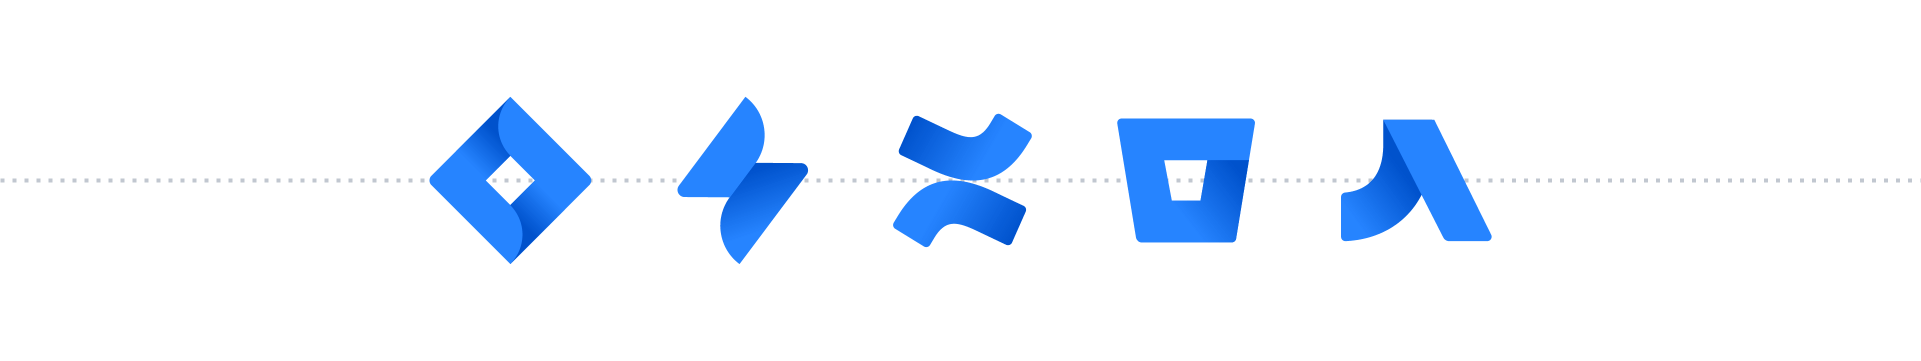 Horizontal alignment of Atlassian logomarks.